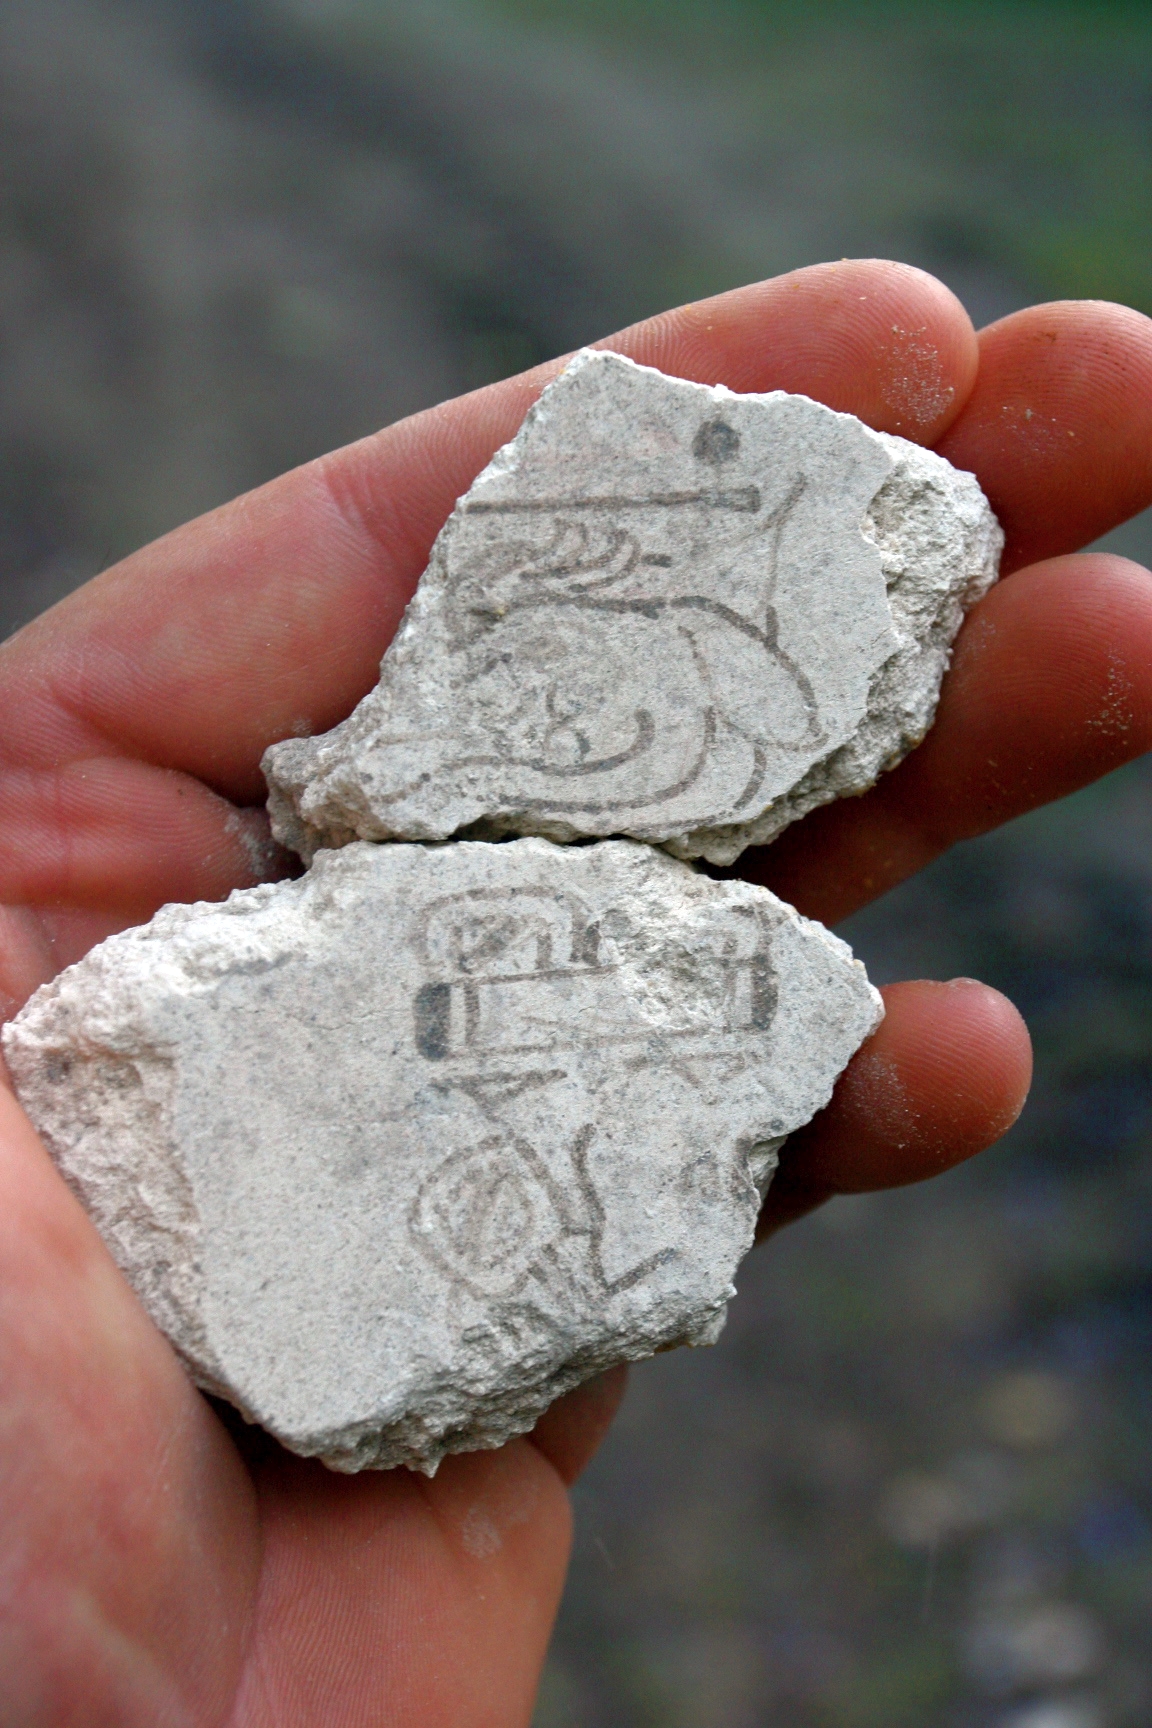 Earliest Maya calendar fragment found in Guatemala